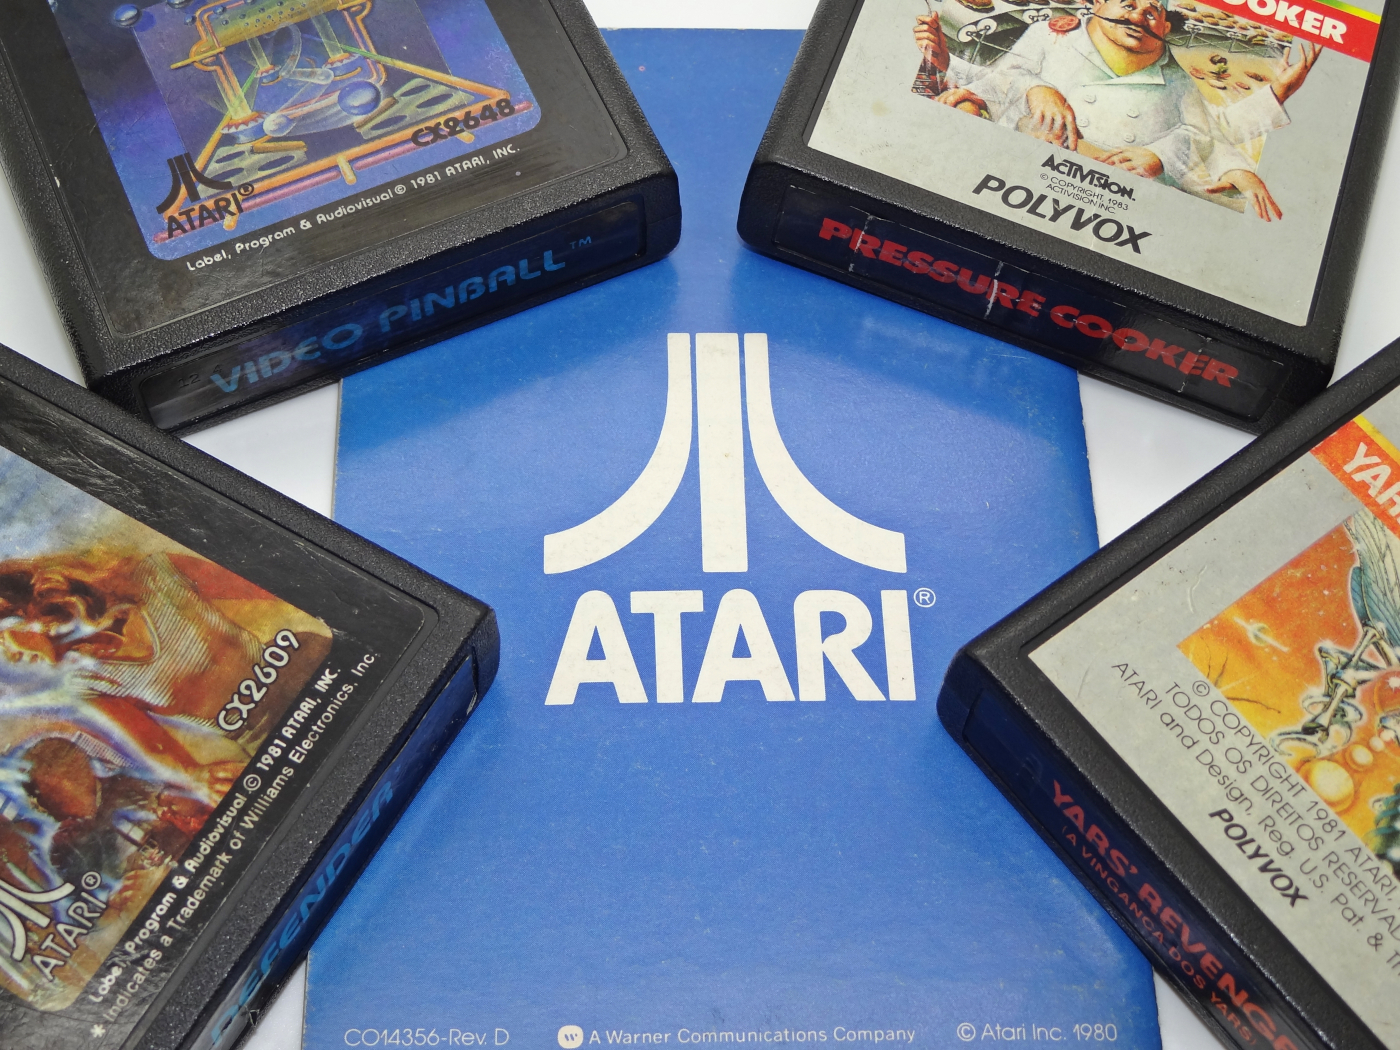 Atari kupuje Intellivision